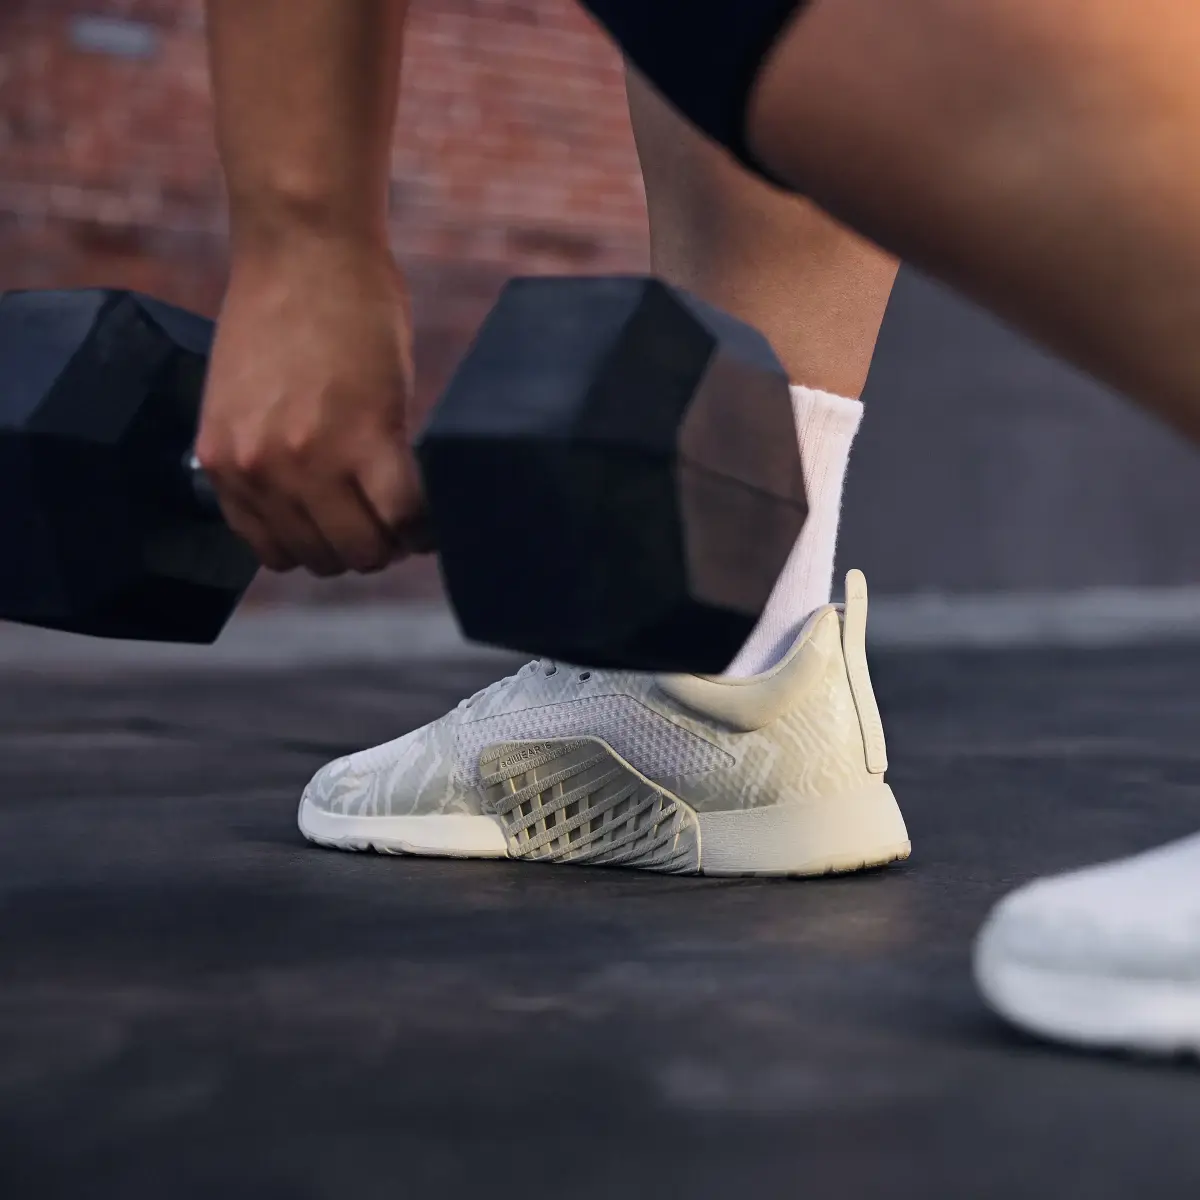 Adidas Dropset 2 Trainer Schuh. 3